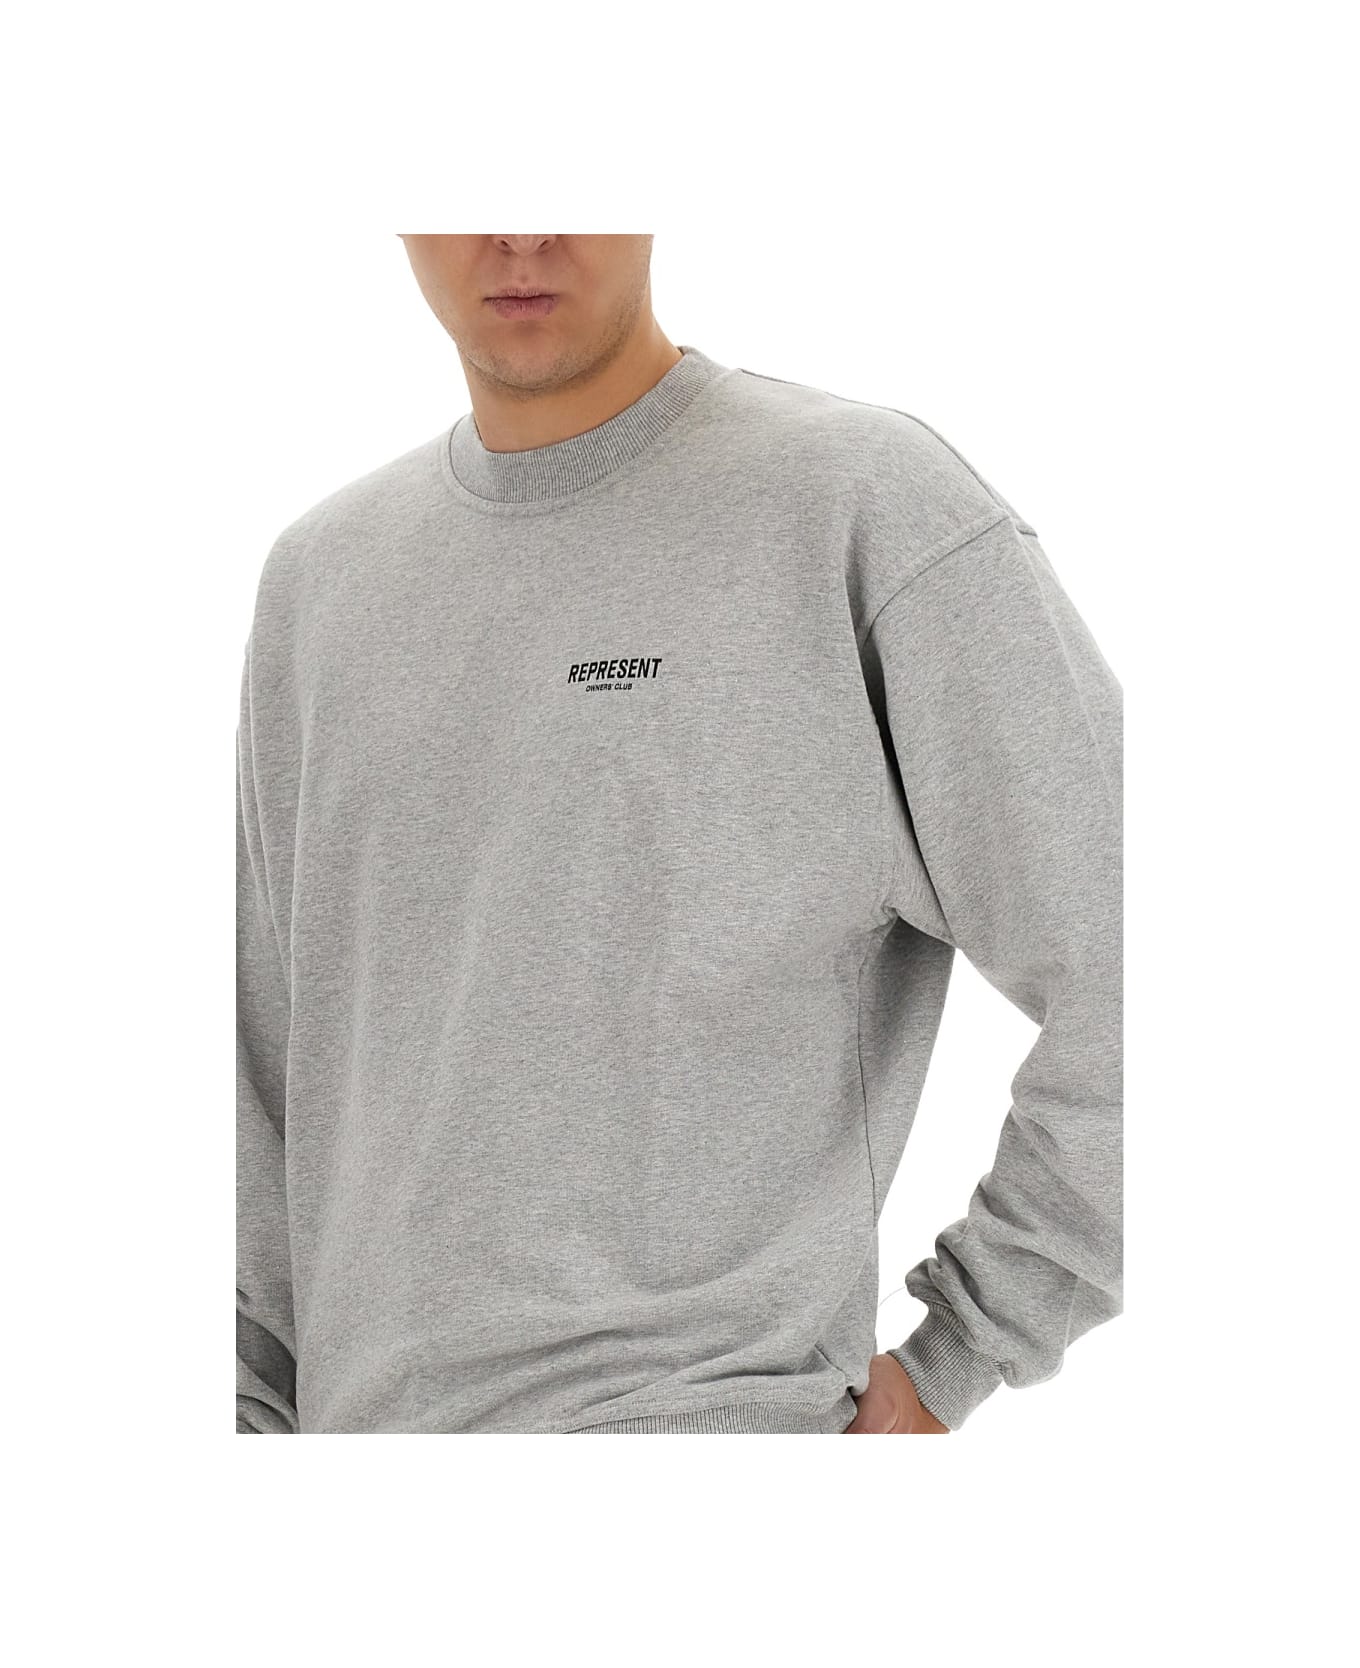 REPRESENT Sweatshirt With Logo - GREY